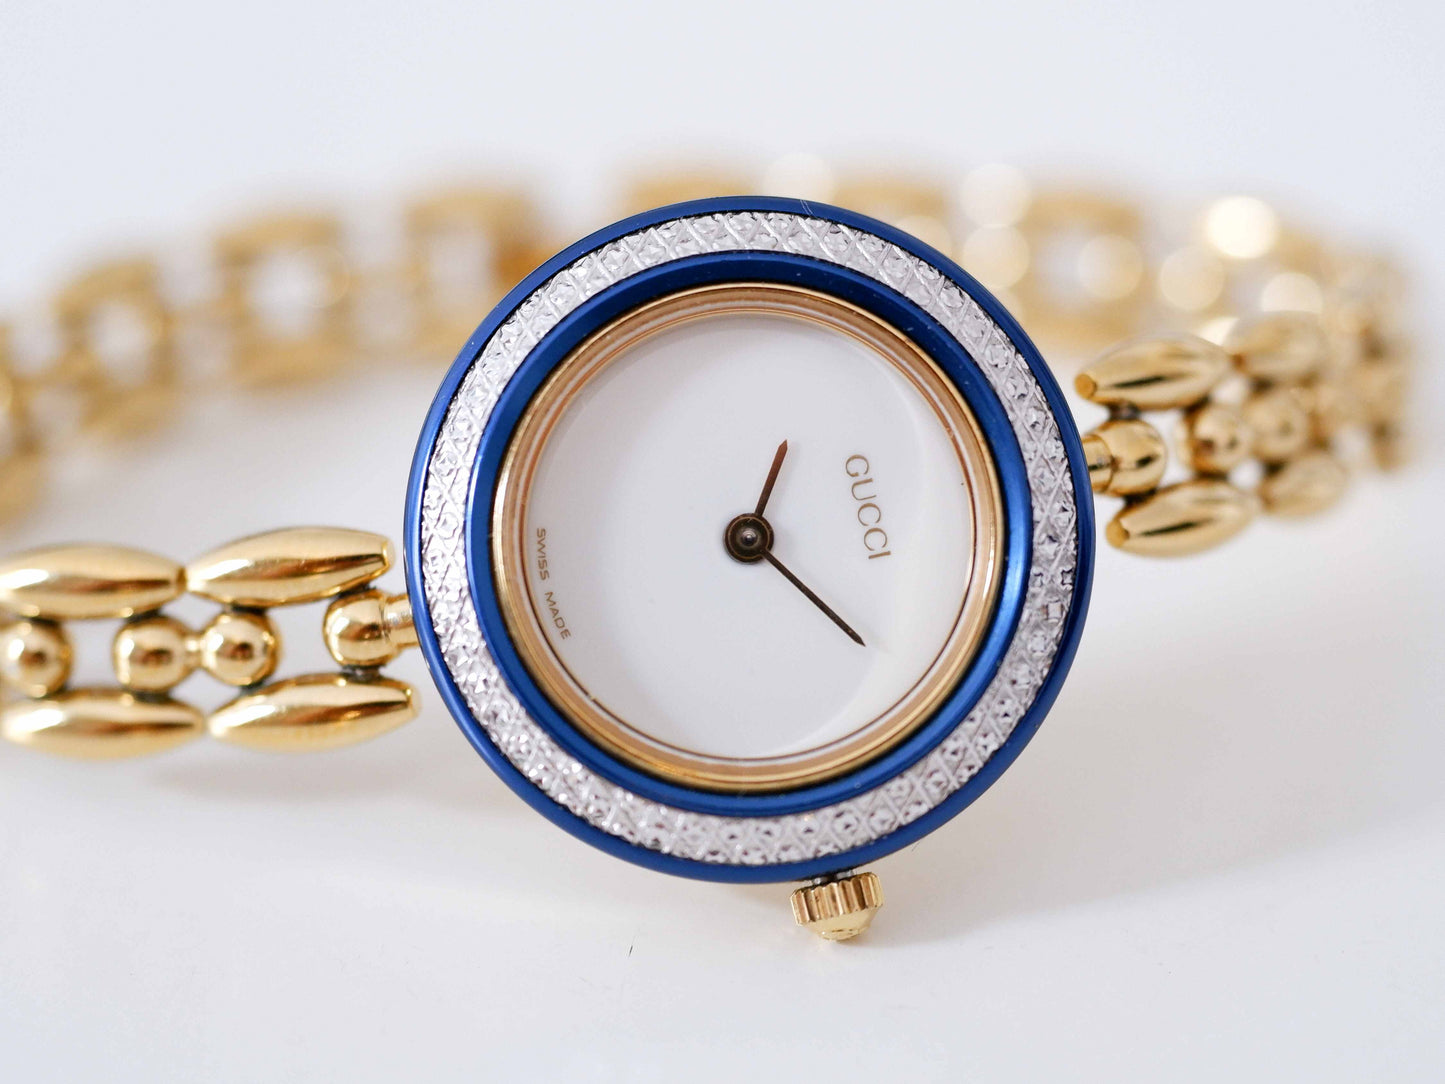 Gucci 11/12.2 Bezel: Vintage Ladies Watch 90s Golden Classic